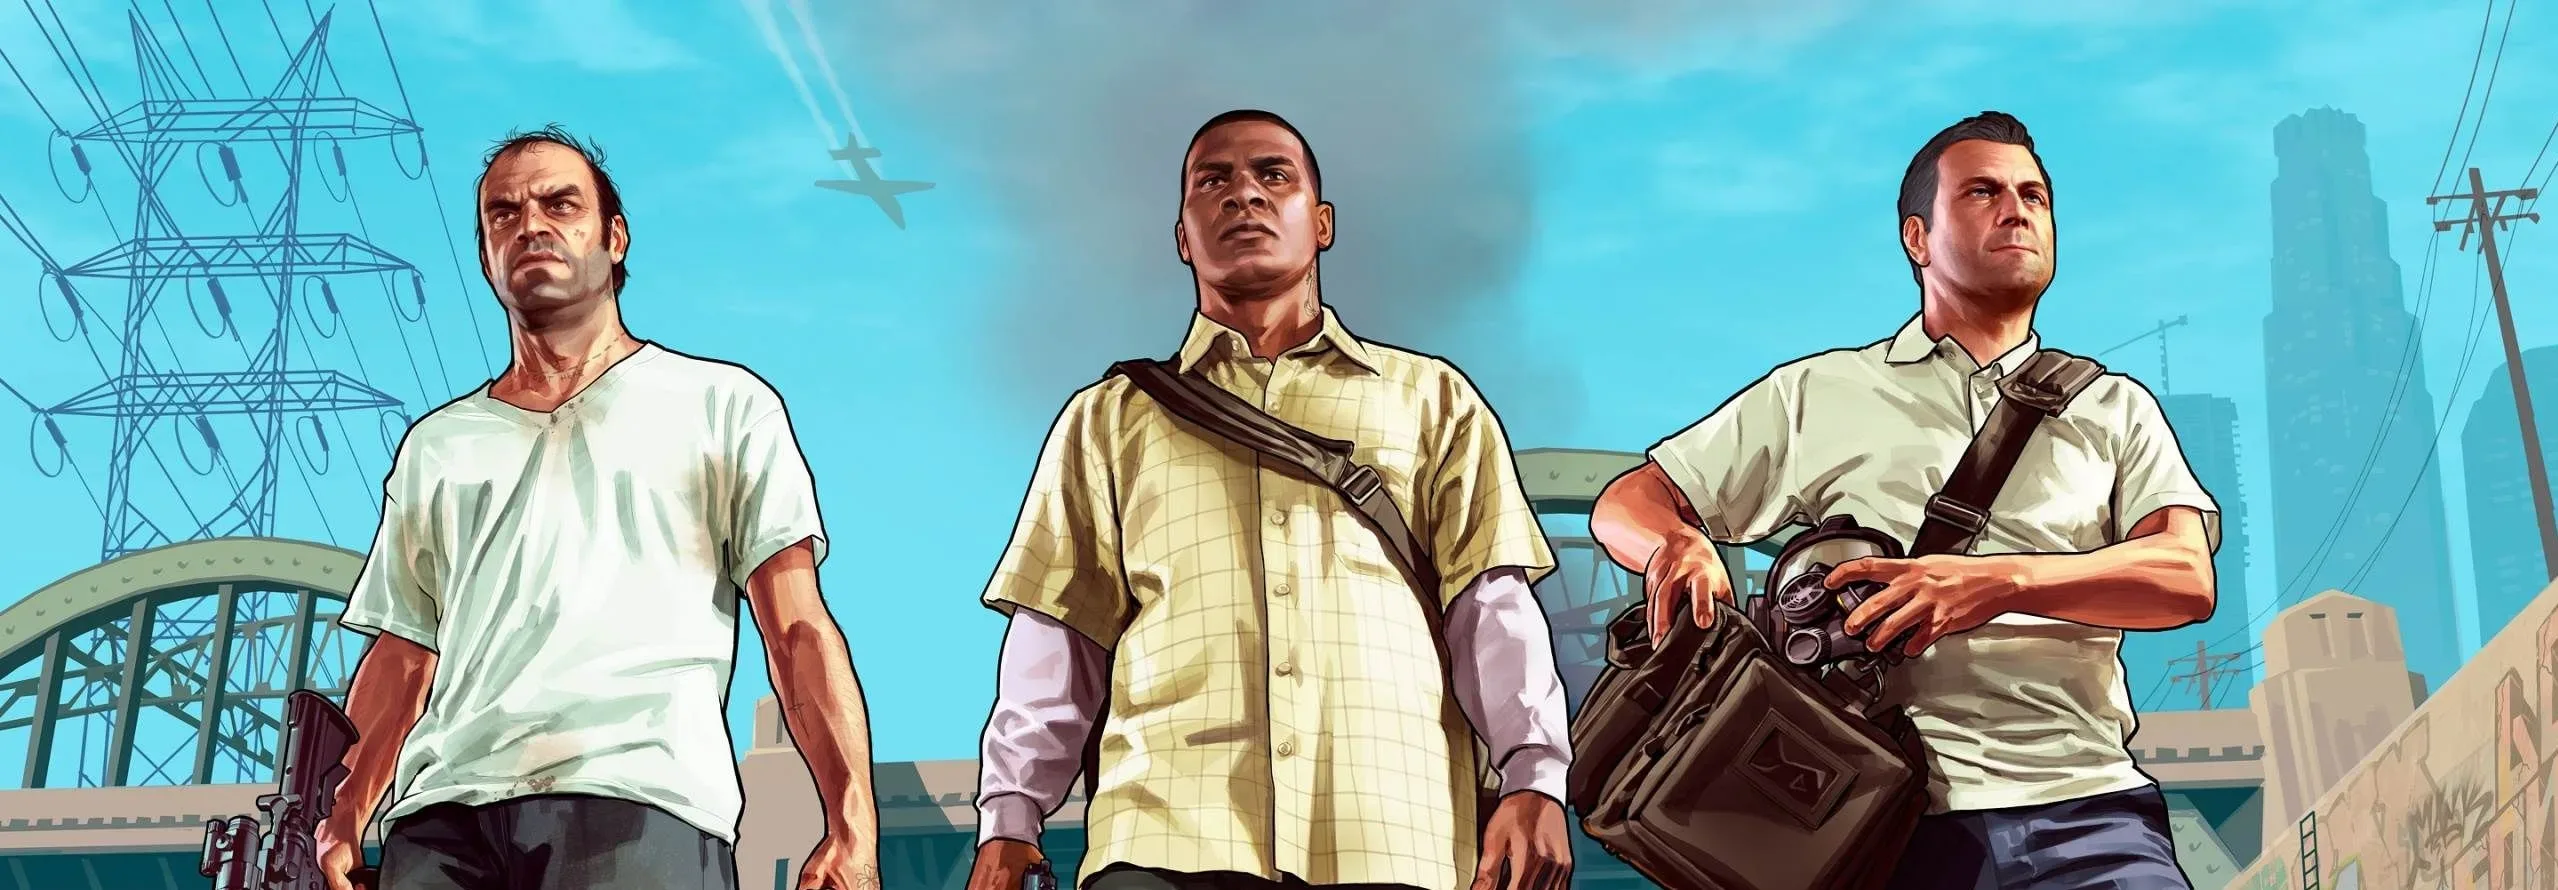 لعبة Grand Theft Auto V متوفرة دلوقتي مجاناً على متجر Epic Games